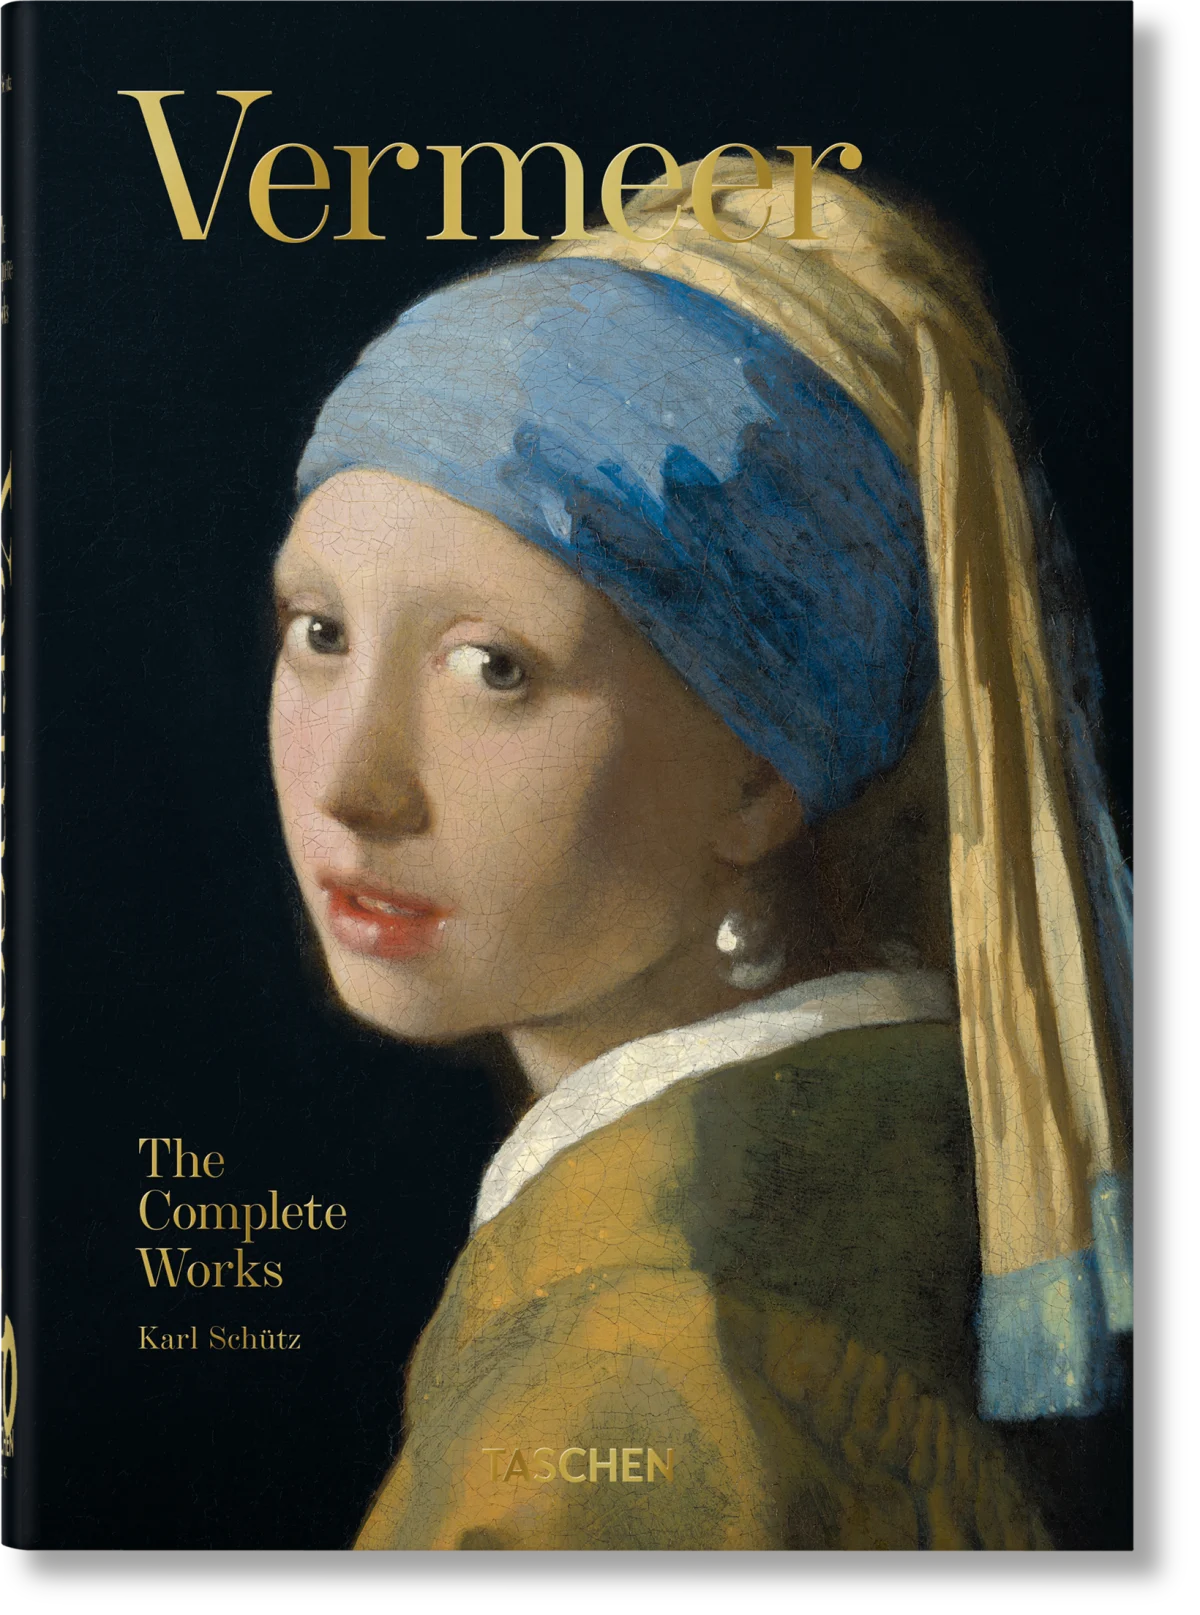 Vermeer. L'œuvre complet. 40th Ed.